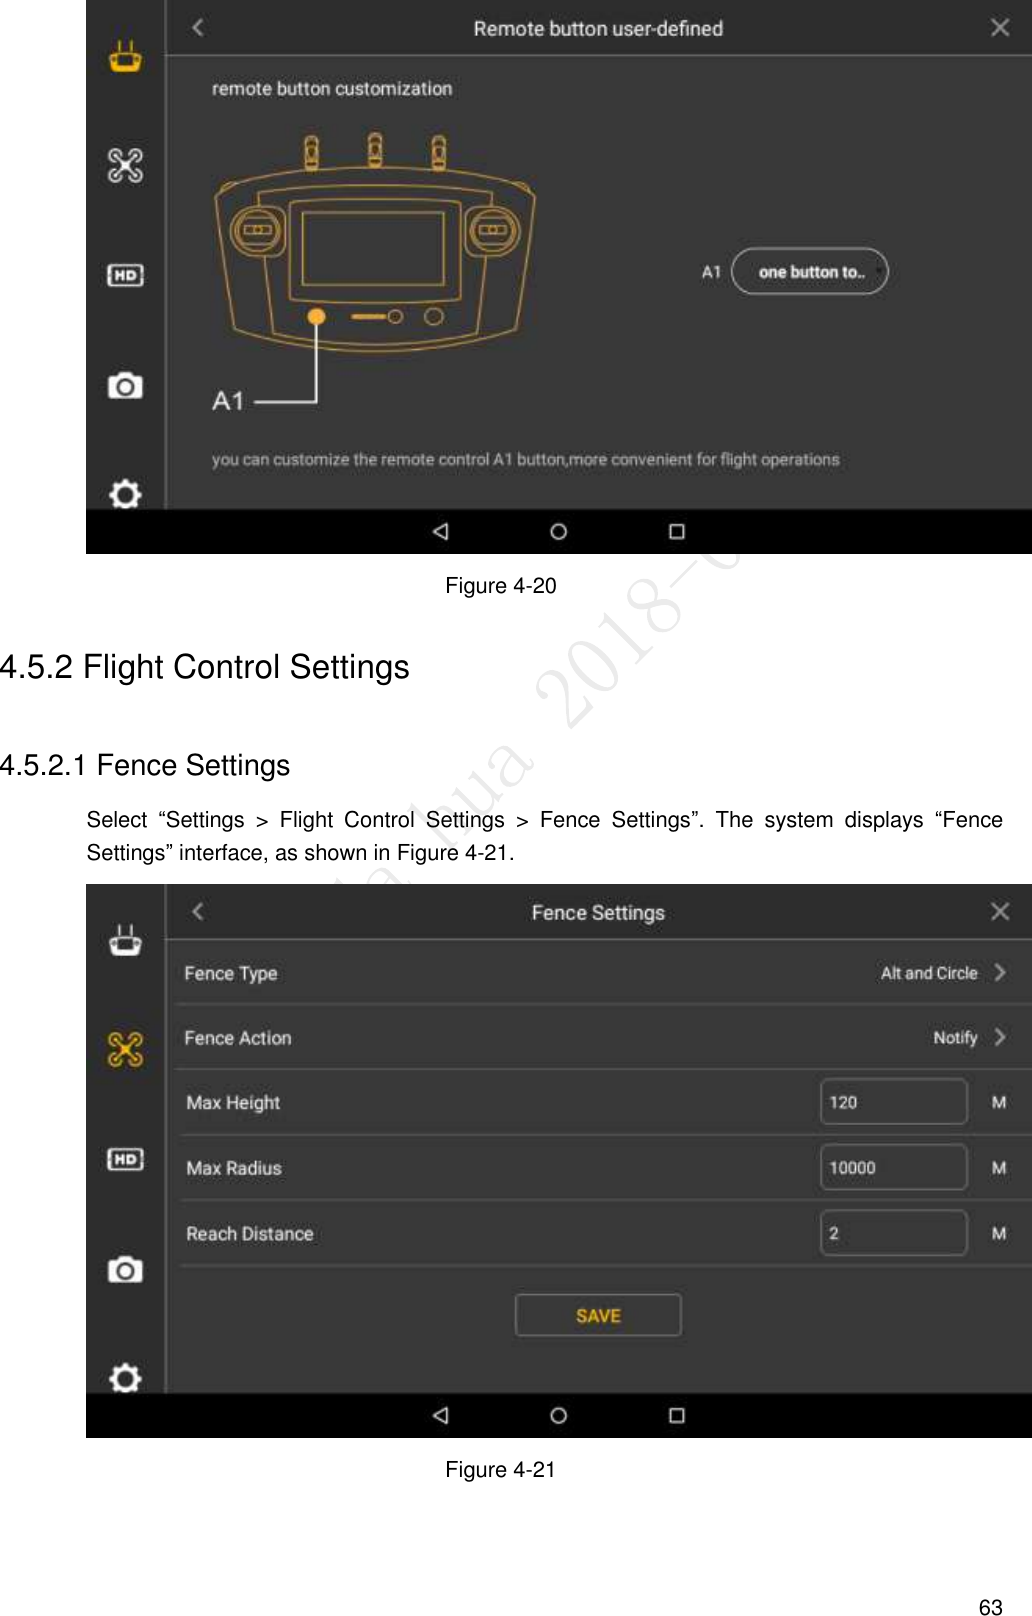  63  Figure 4-20 4.5.2 Flight Control Settings 4.5.2.1 Fence Settings Select  “Settings  &gt;  Flight  Control  Settings  &gt;  Fence  Settings”.  The  system  displays  “Fence Settings” interface, as shown in Figure 4-21.  Figure 4-21 